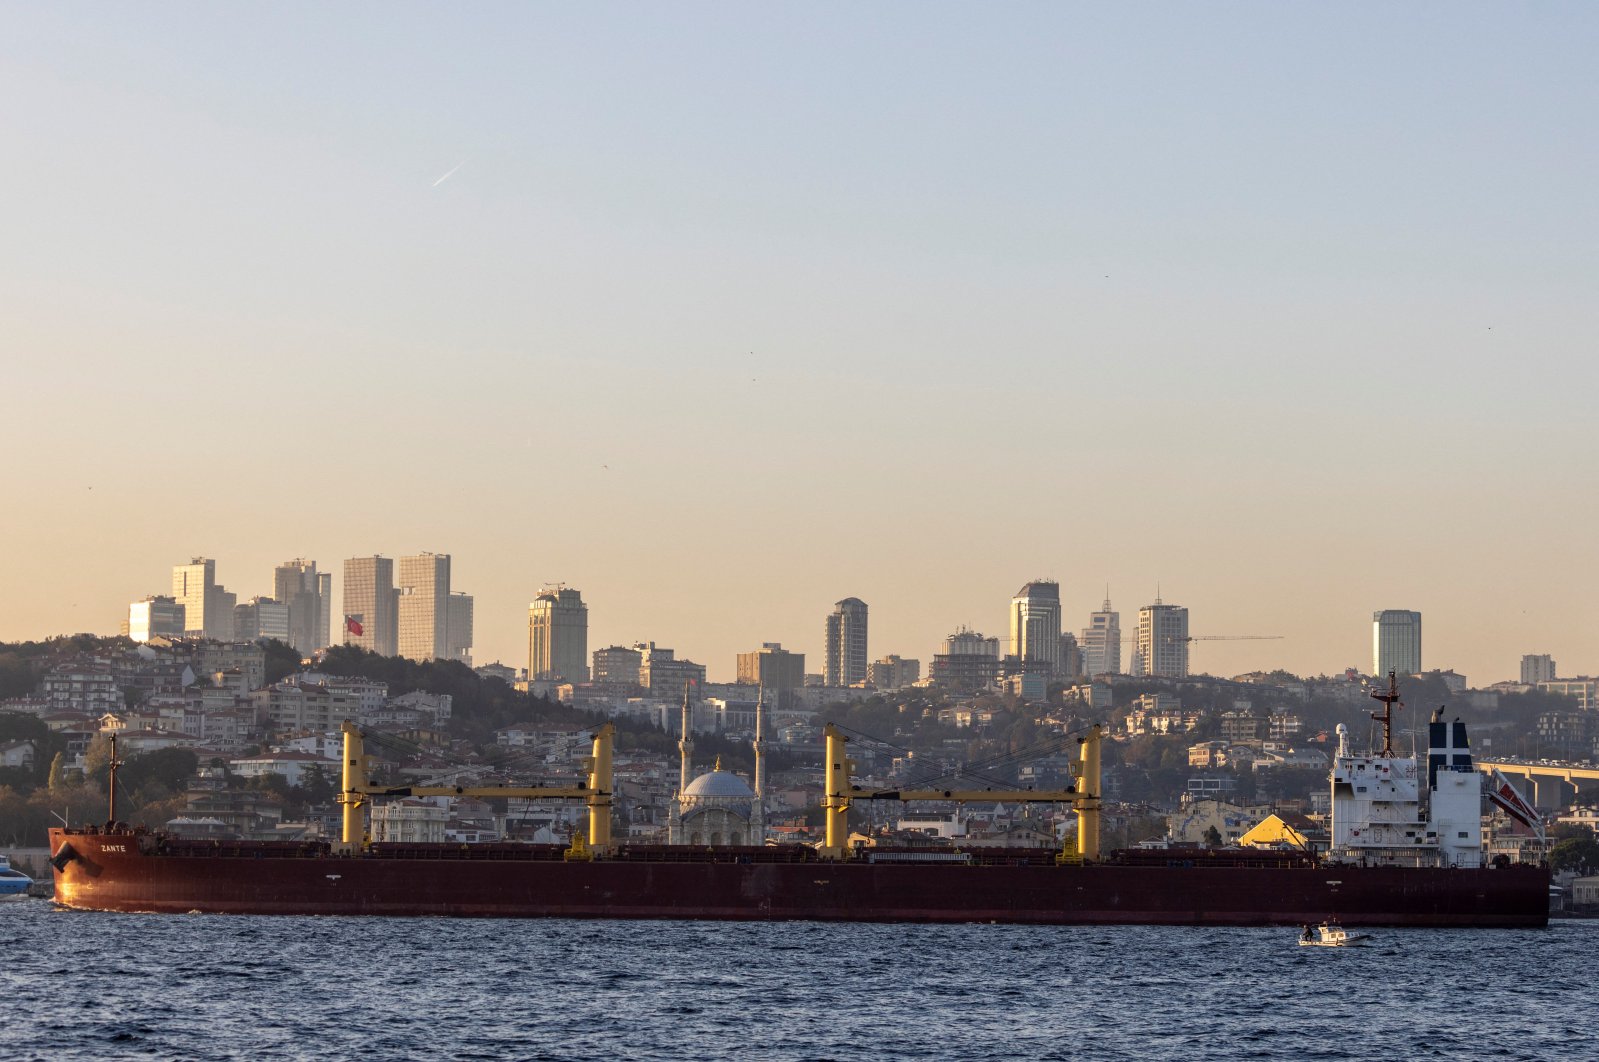 Zante, a cargo vessel carrying Ukrainian grain, transits the Bosporus, in Istanbul, Türkiye, Nov. 2, 2022. (Reuters Photo)